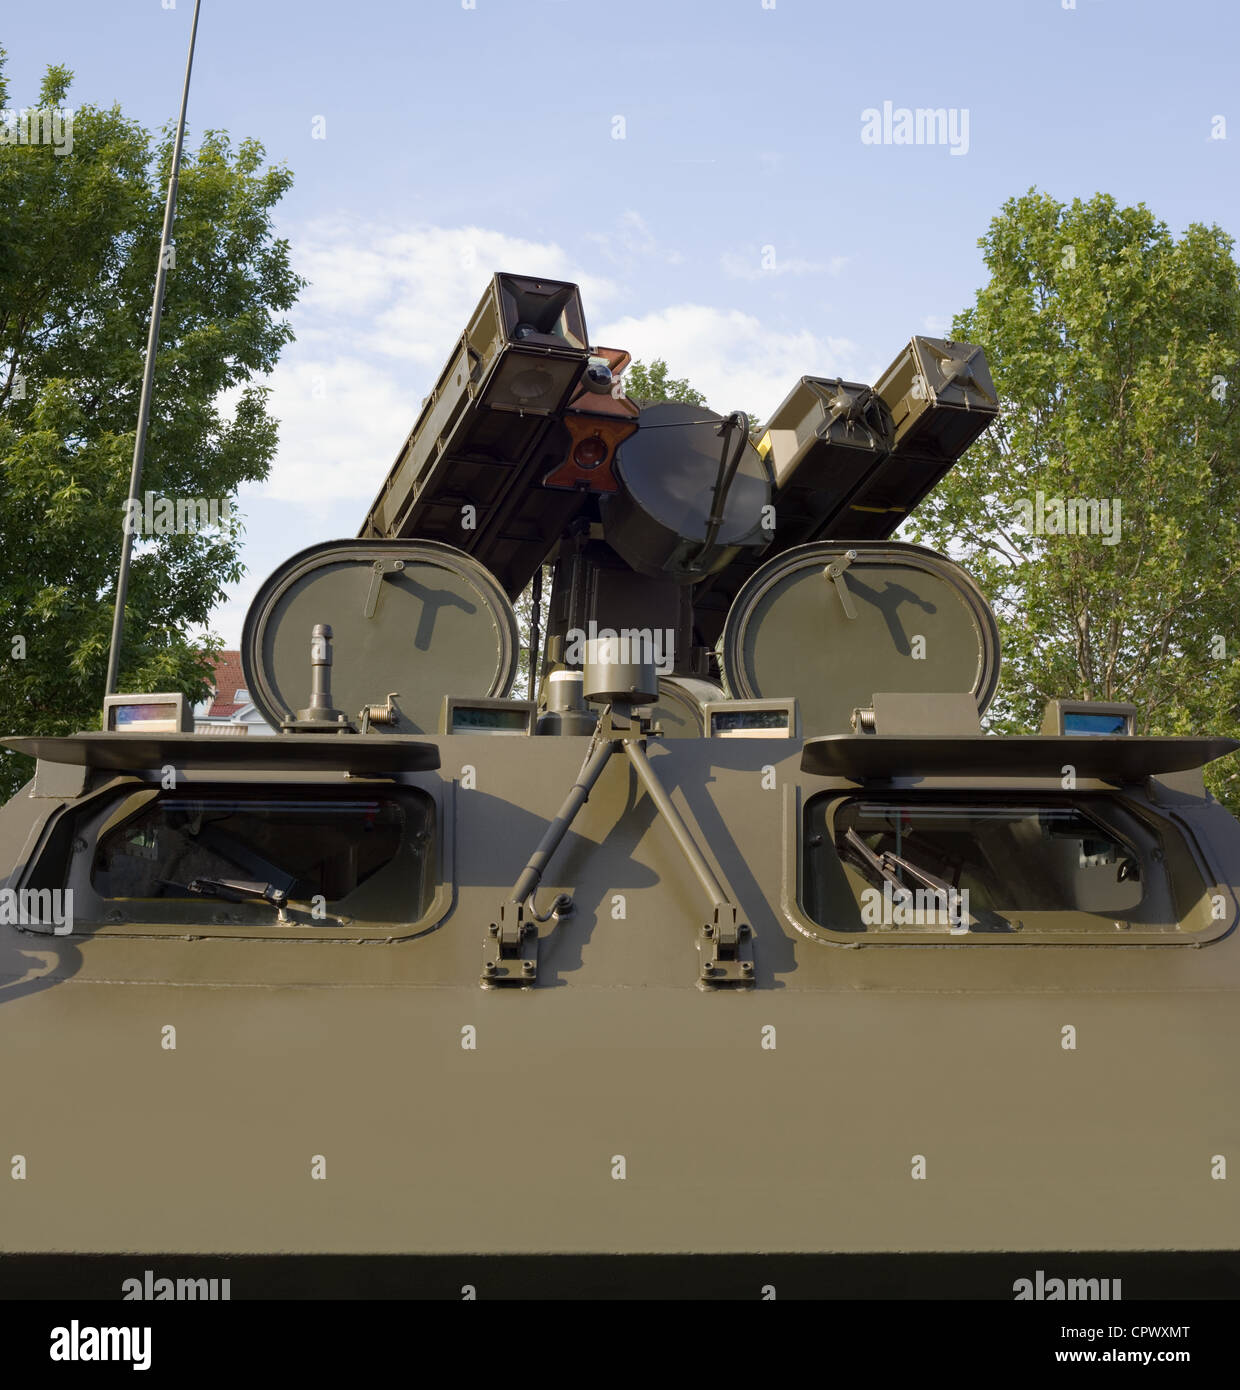 Vier Anti-Air-Turm Raketenwerfer auf gepanzertes Fahrzeug Stockfoto